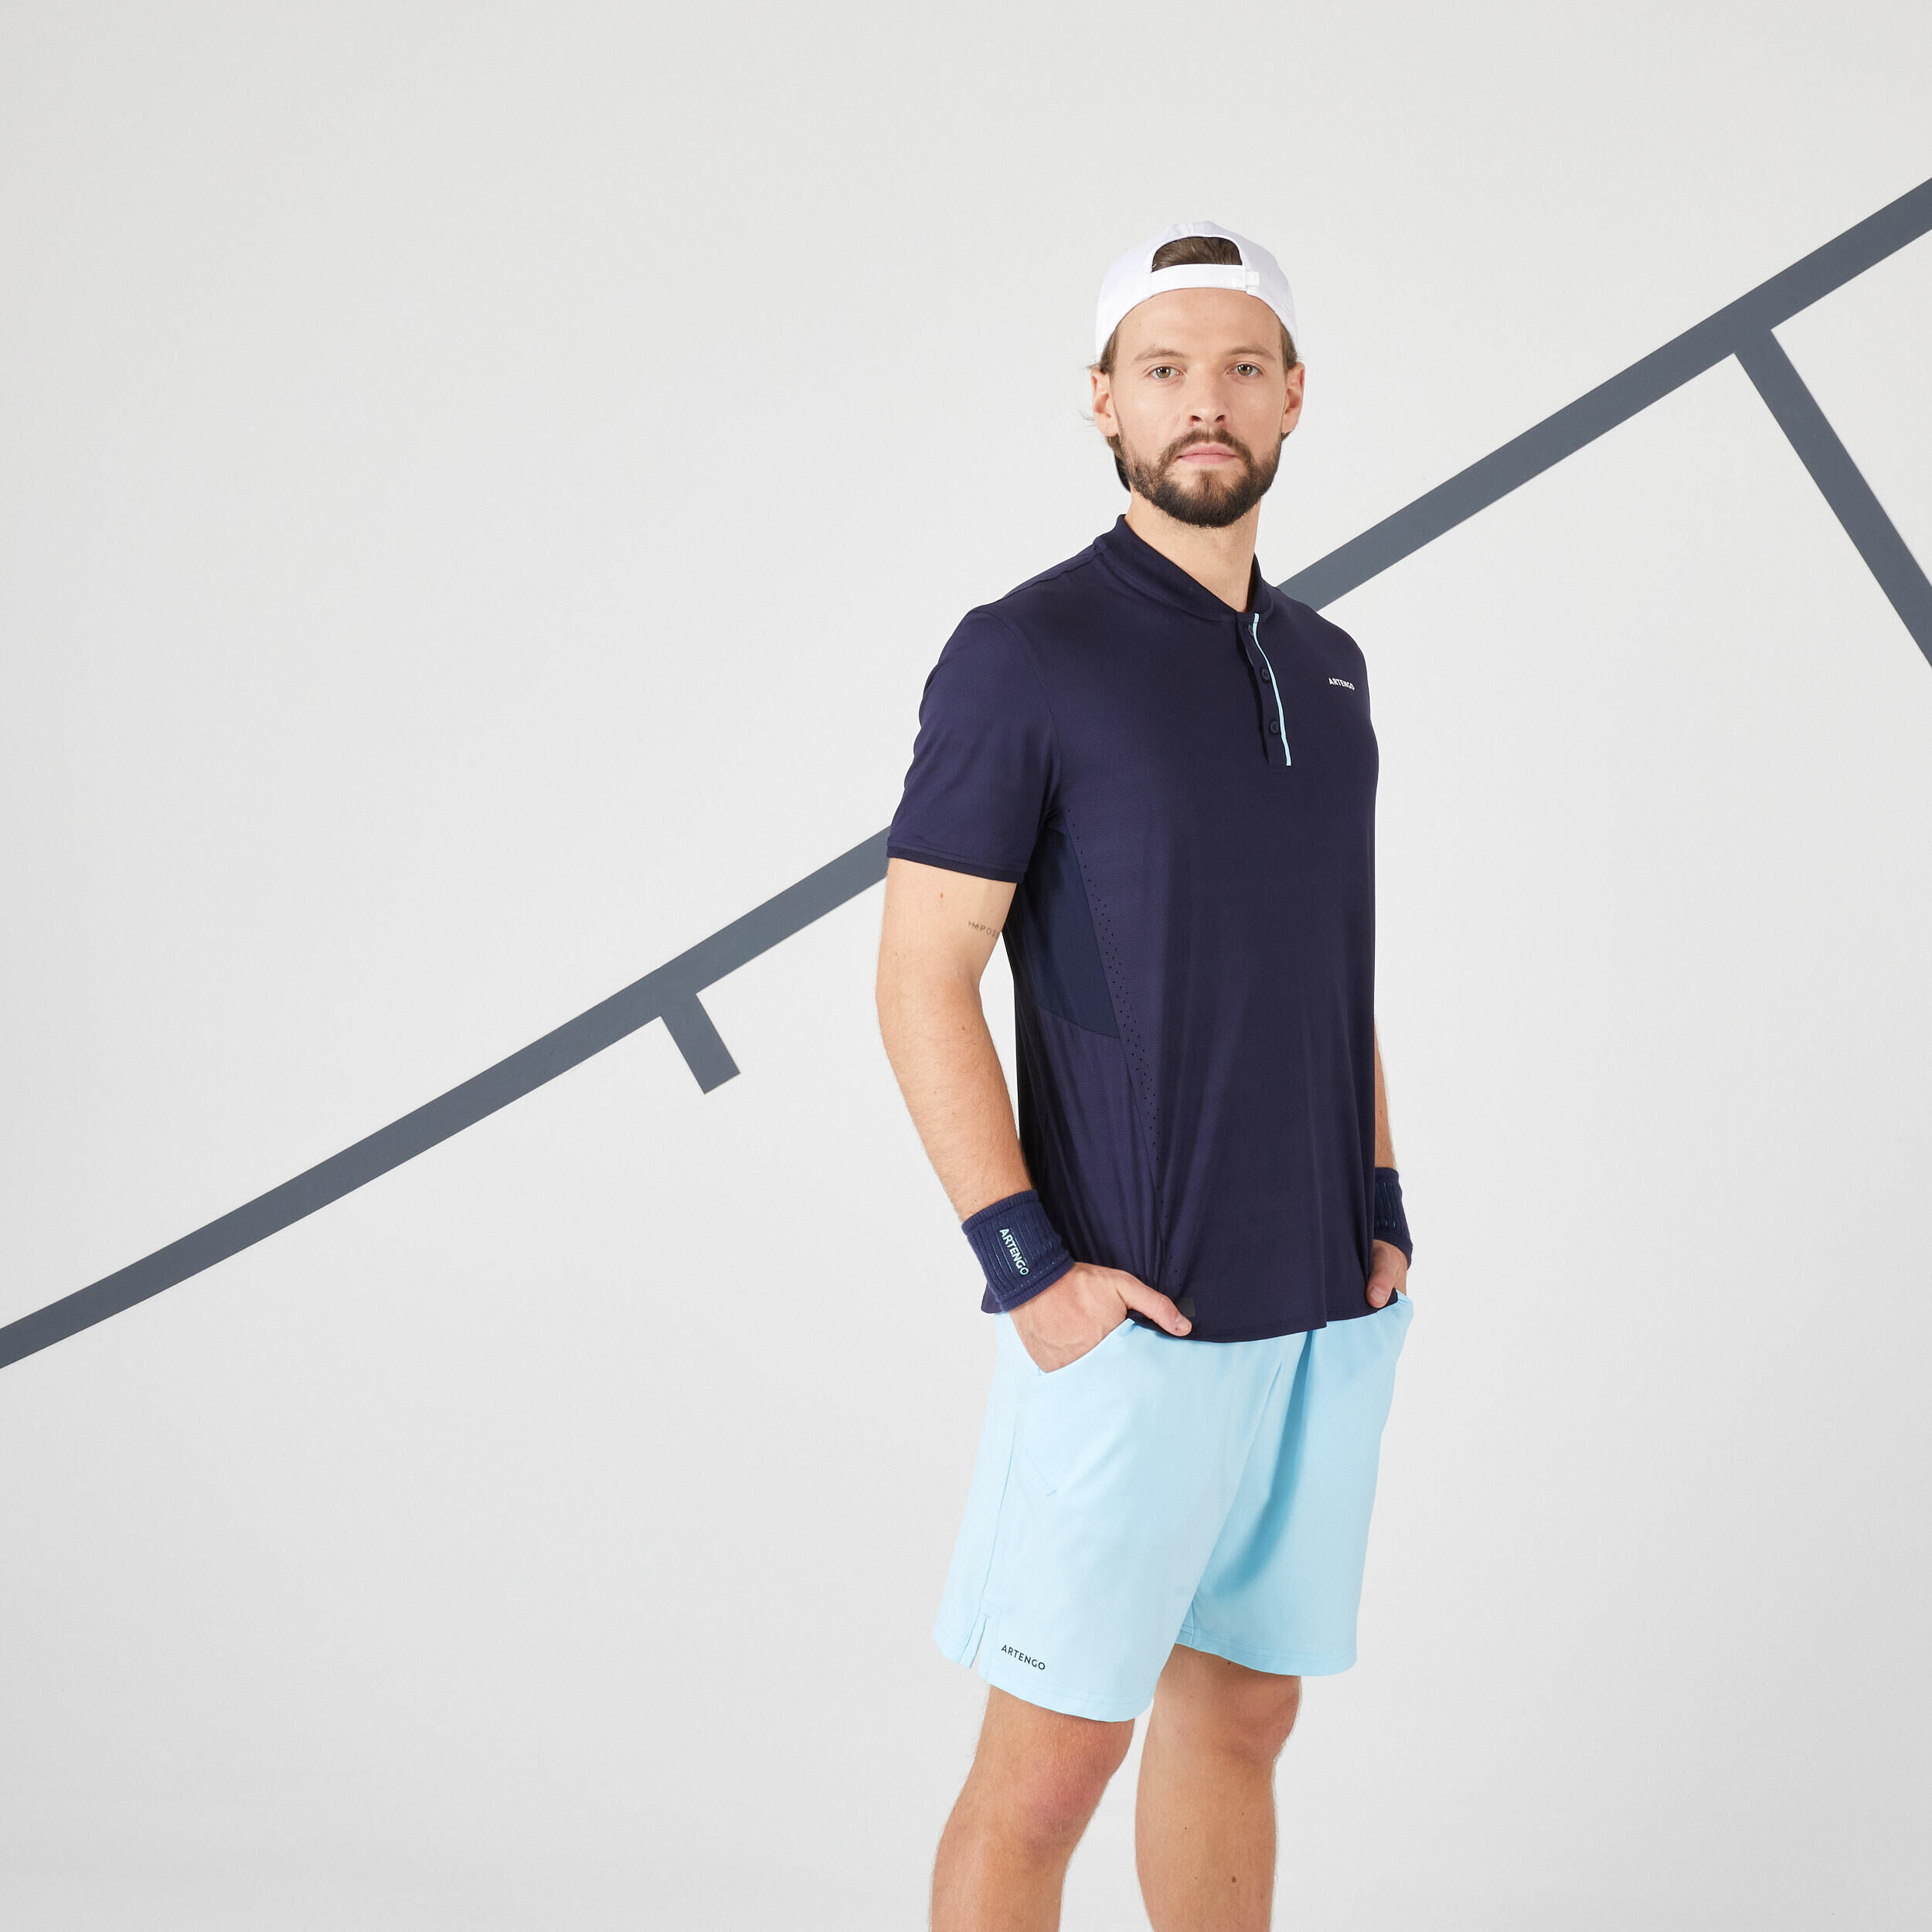 ARTENGO Men's Tennis Short-Sleeved T-Shirt Dry+ - Navy Blue